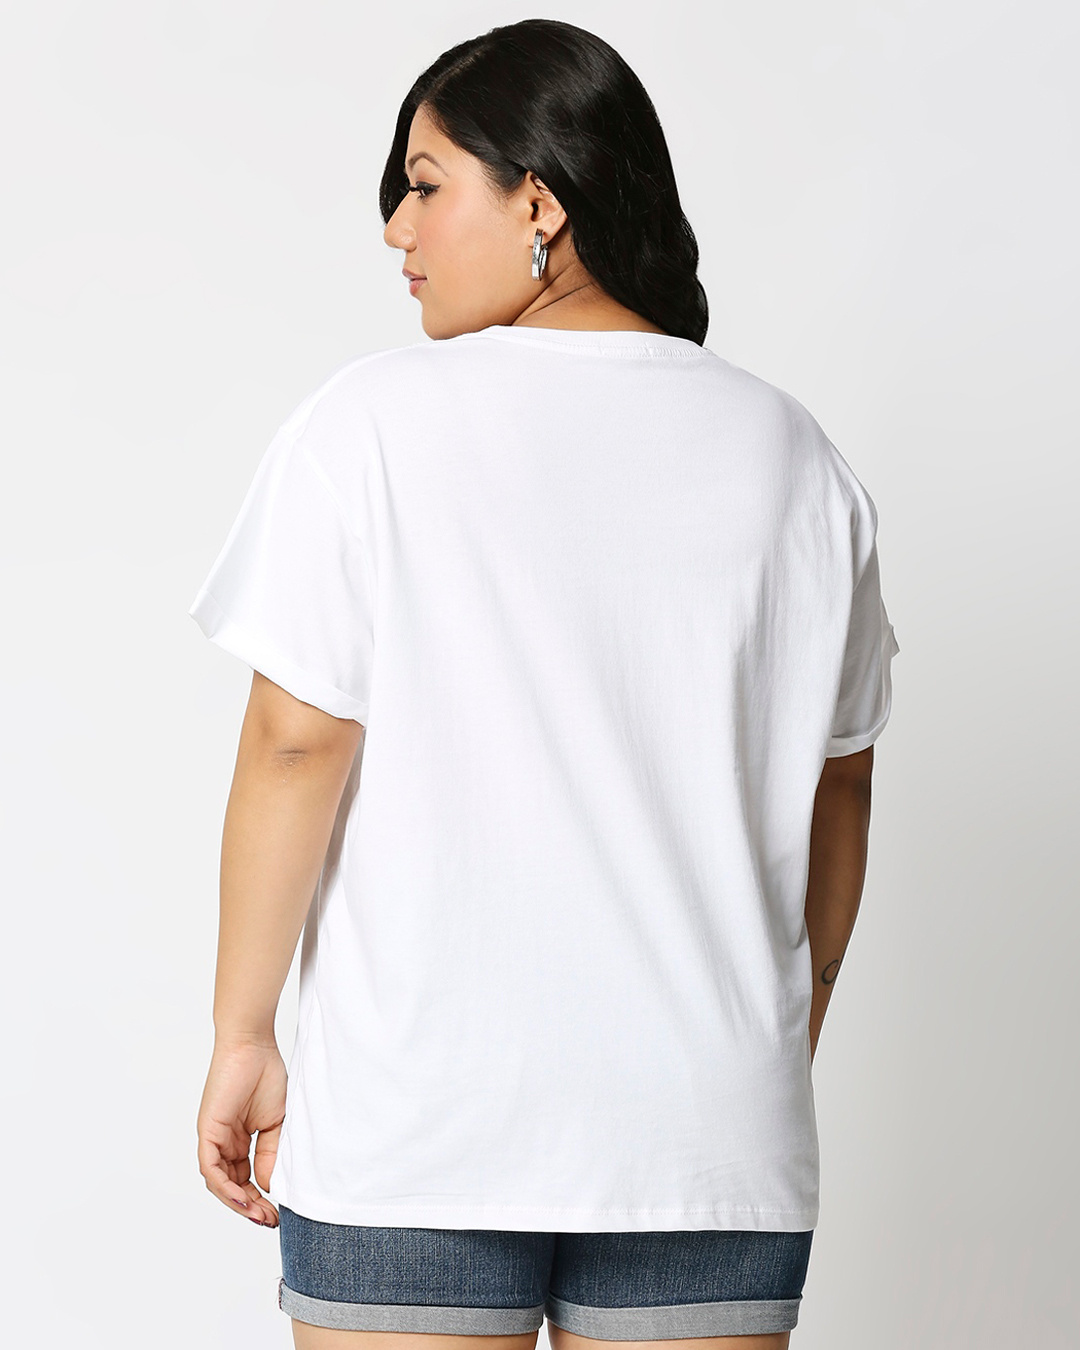 Shop Climbing pocket panda Women's Boyfriend T-shirt Plus Size-Back